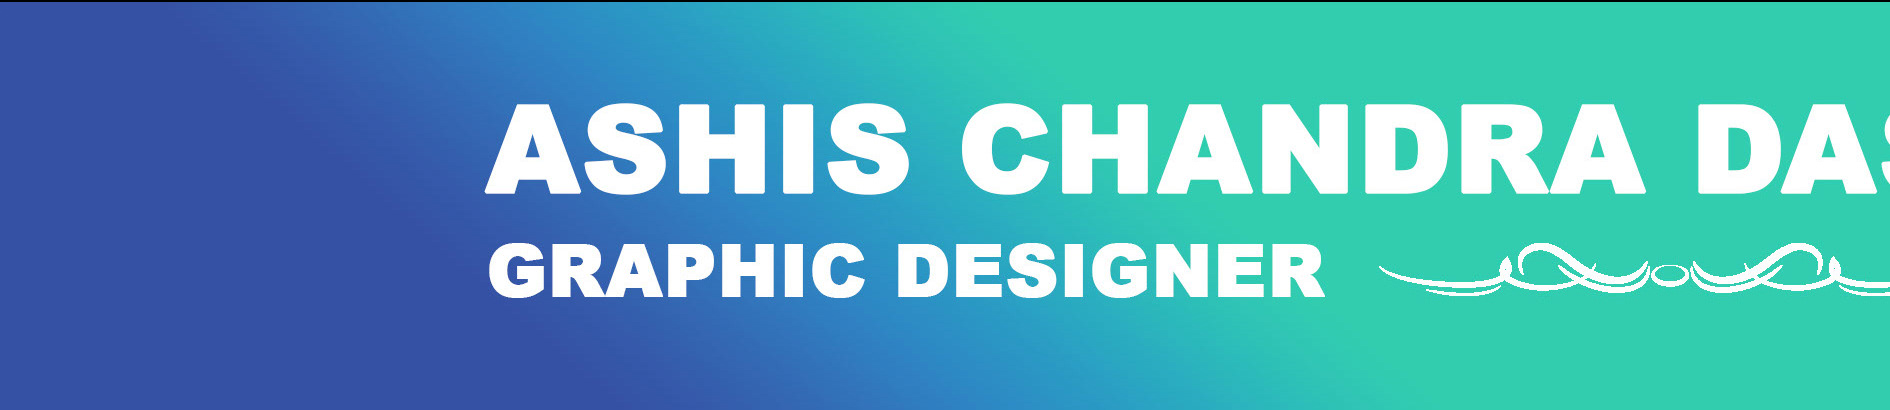 ASHIS CHANDRA DAS's profile banner